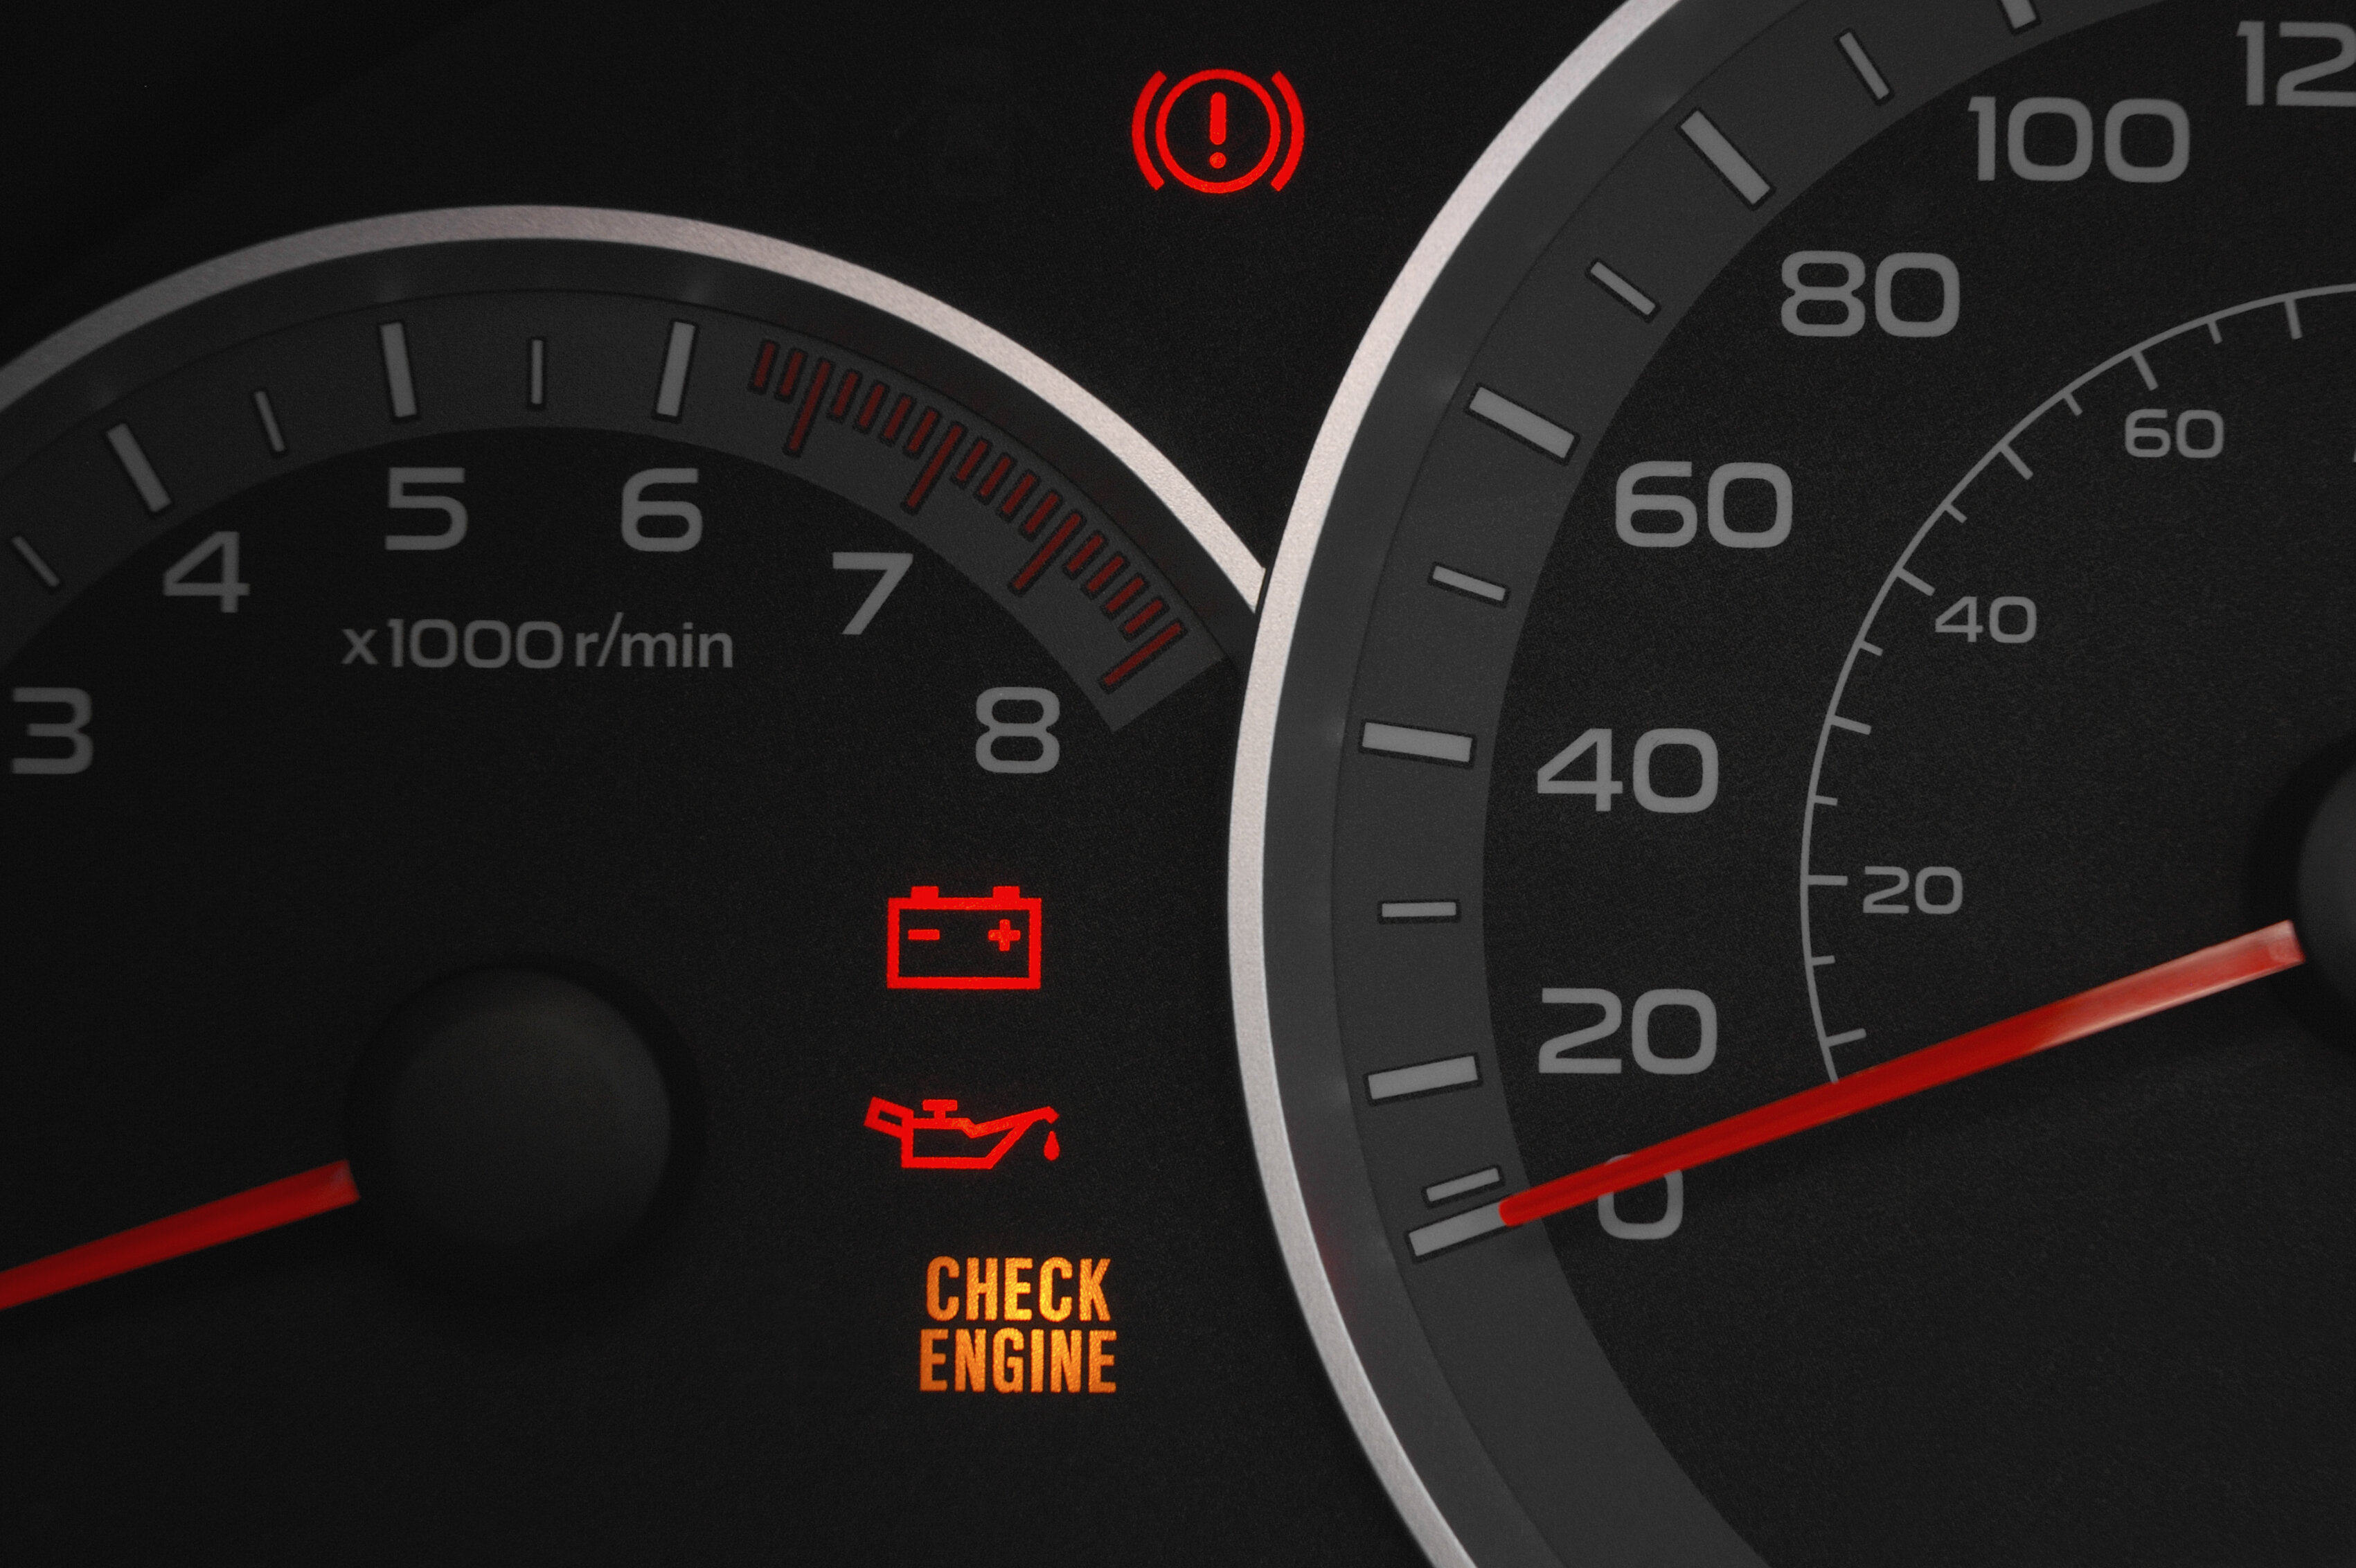 Car dashboard showing illuminated check engine light and battery warning light